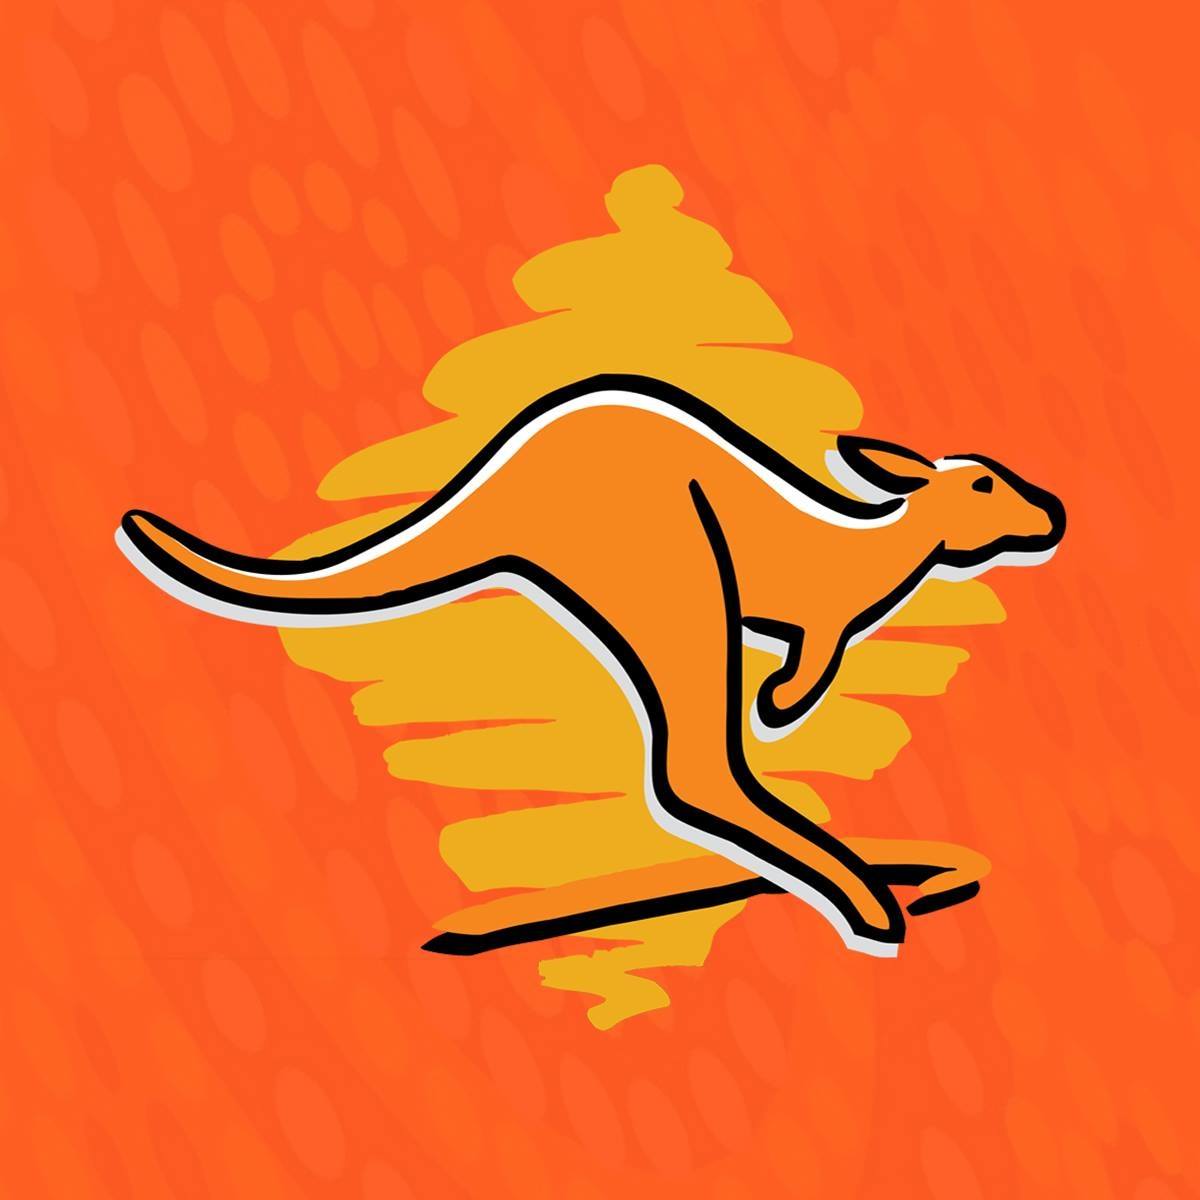 orange kangaroo cartoon with red and yellow background